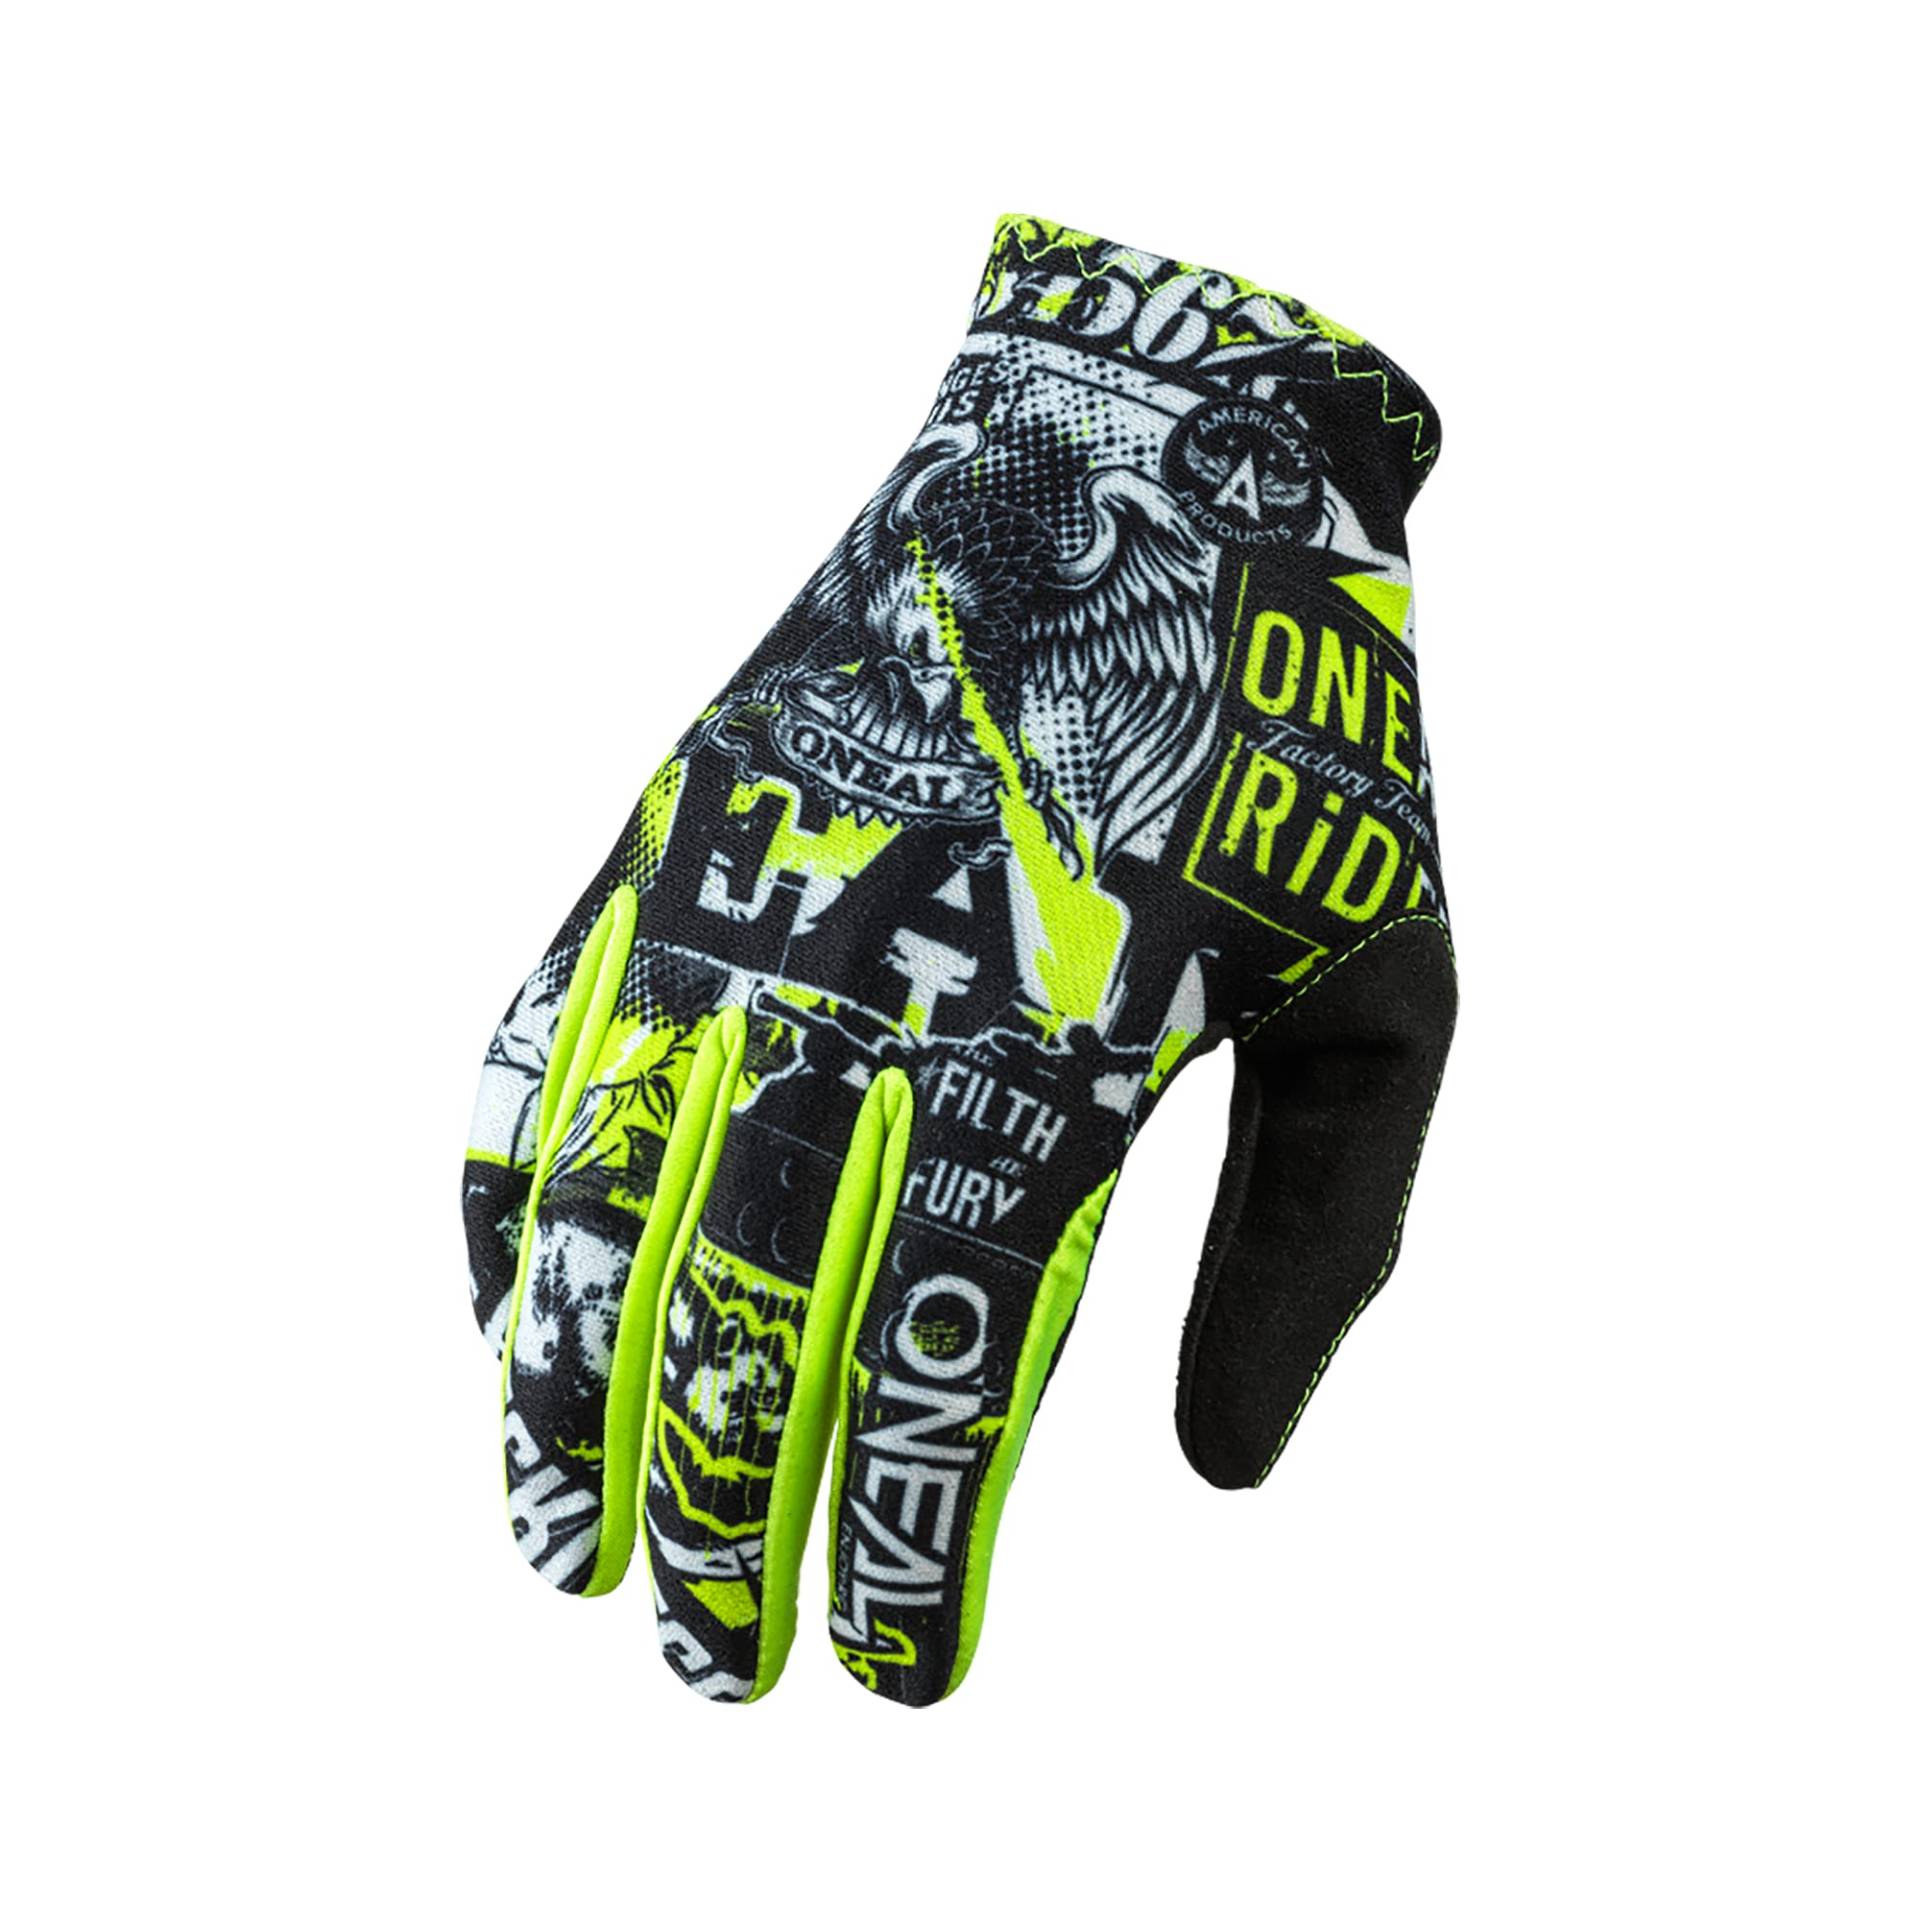 O'NEAL | Fahrrad- & Motocross-Handschuhe | Kinder | MX MTB DH FR Downhill Freeride | Langlebige, Flexible Materialien, belüftete Handoberseite | Matrix Youth Glove Attack | Bunt | Größe M von O'NEAL